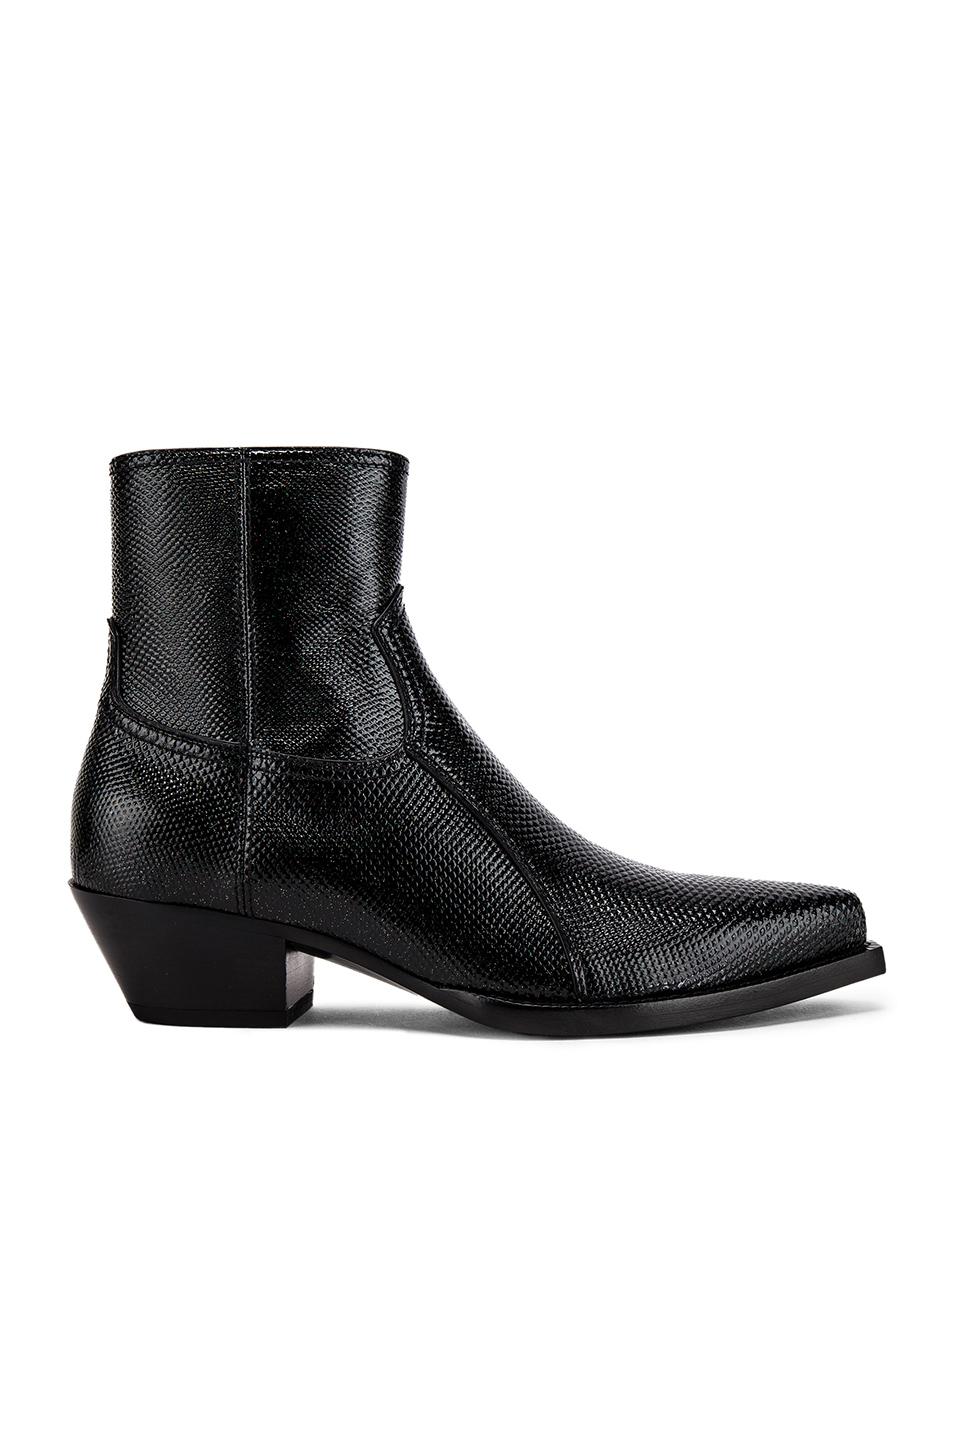 Saint Laurent Leather Lukas Zip Boots in Black for Men - Save 27 